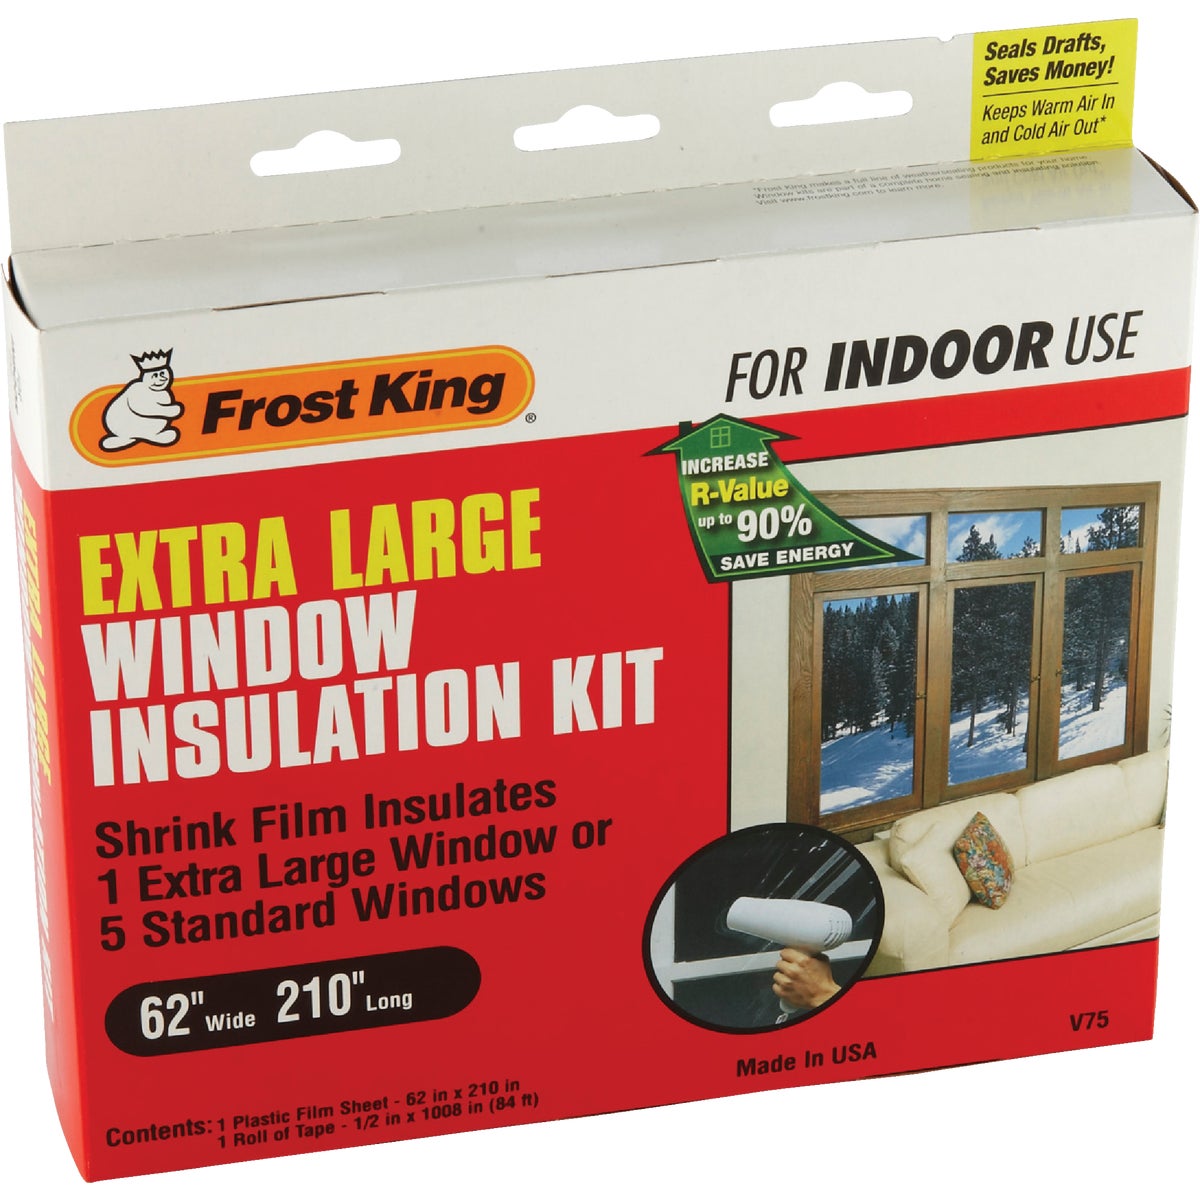 Frost King 62 In. x 210 In. Indoor Shrink Film Window Kit